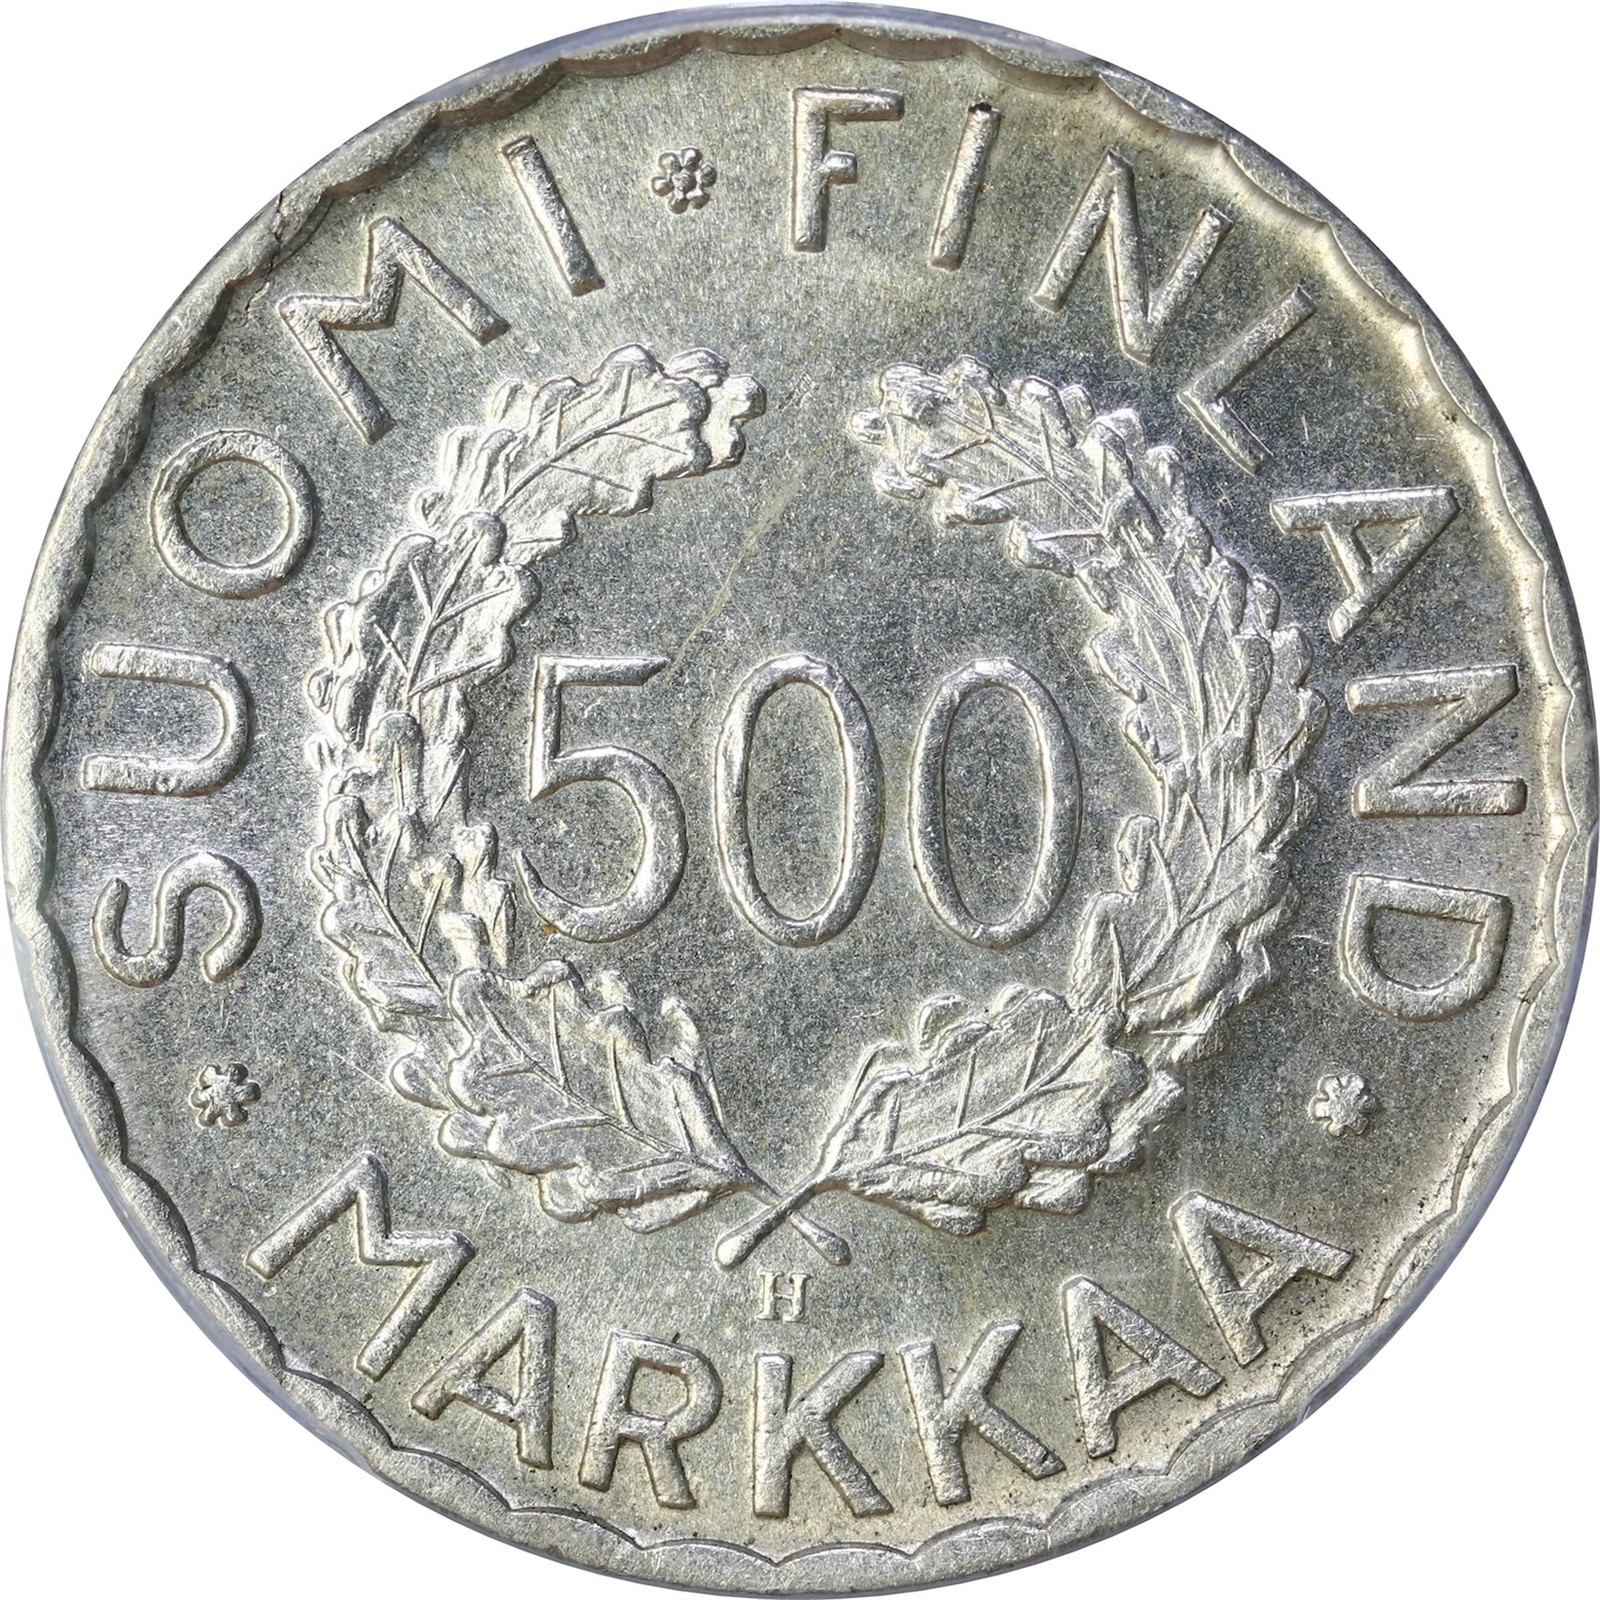 FINLAND. 500 Markaa 1951-H PCGS MS62.